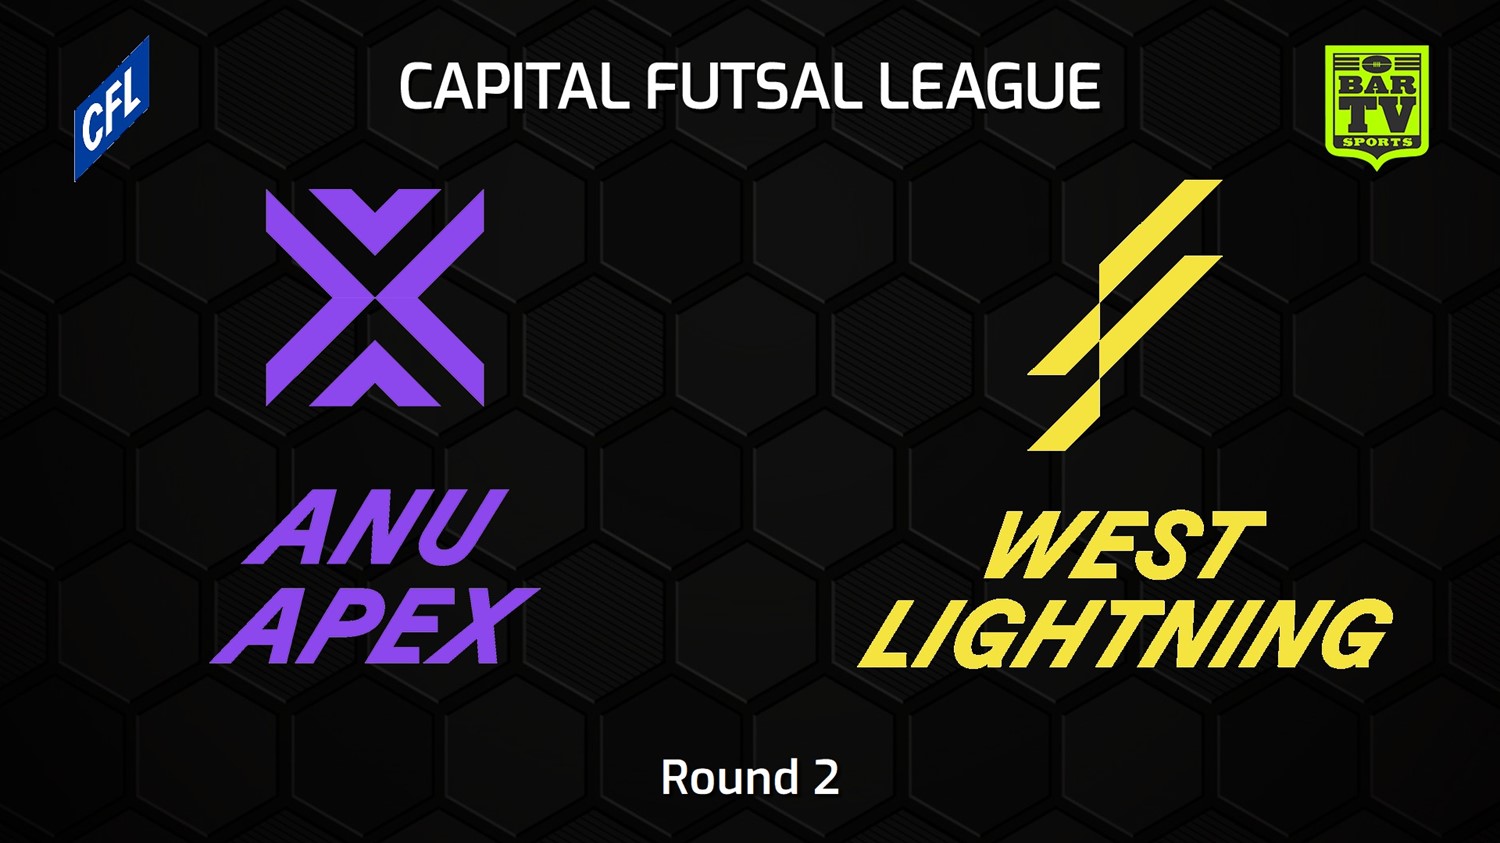 221106-Capital Football Futsal Round 2 - Women's - ANU APEX v West Canberra Lightning Minigame Slate Image